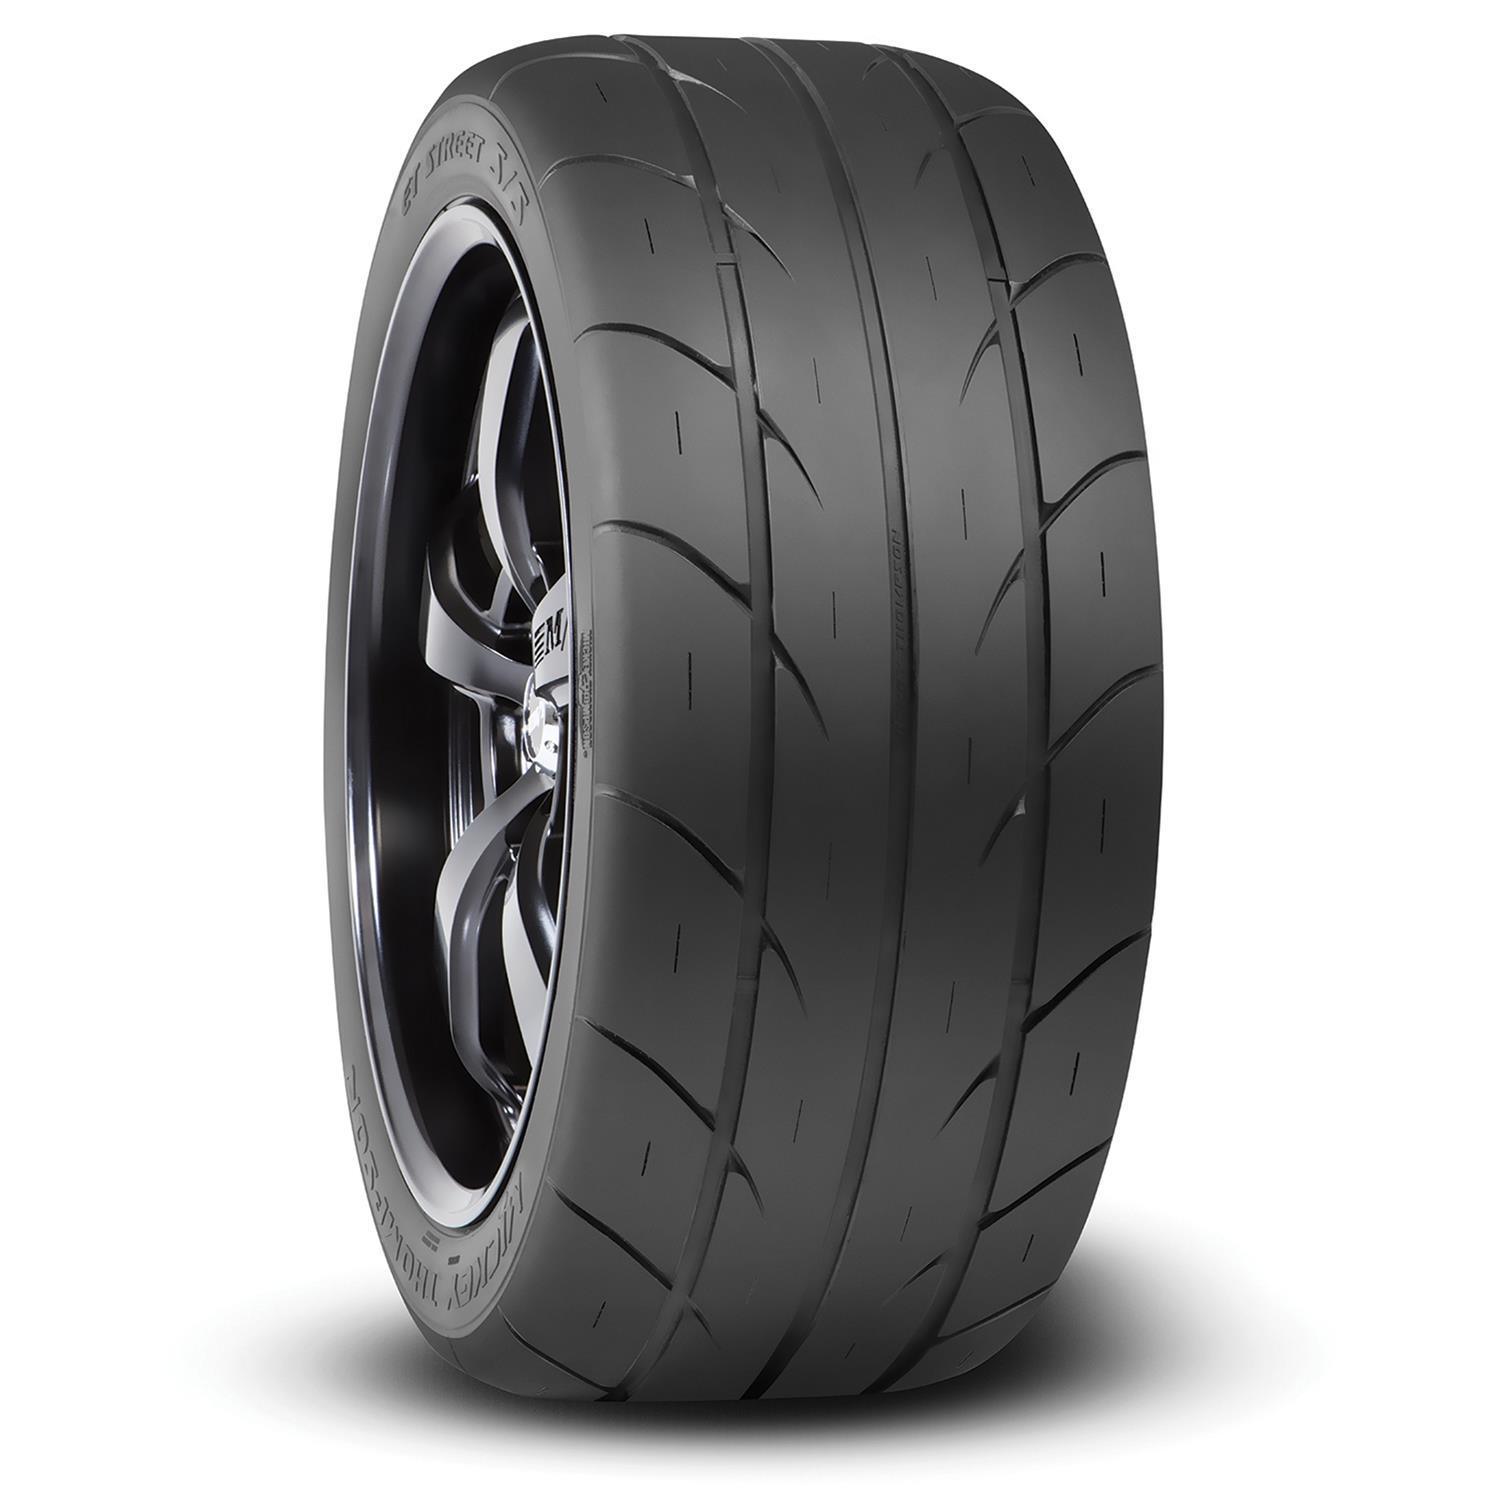 P285/35R19 ET Street S/S Tire - Burlile Performance Products